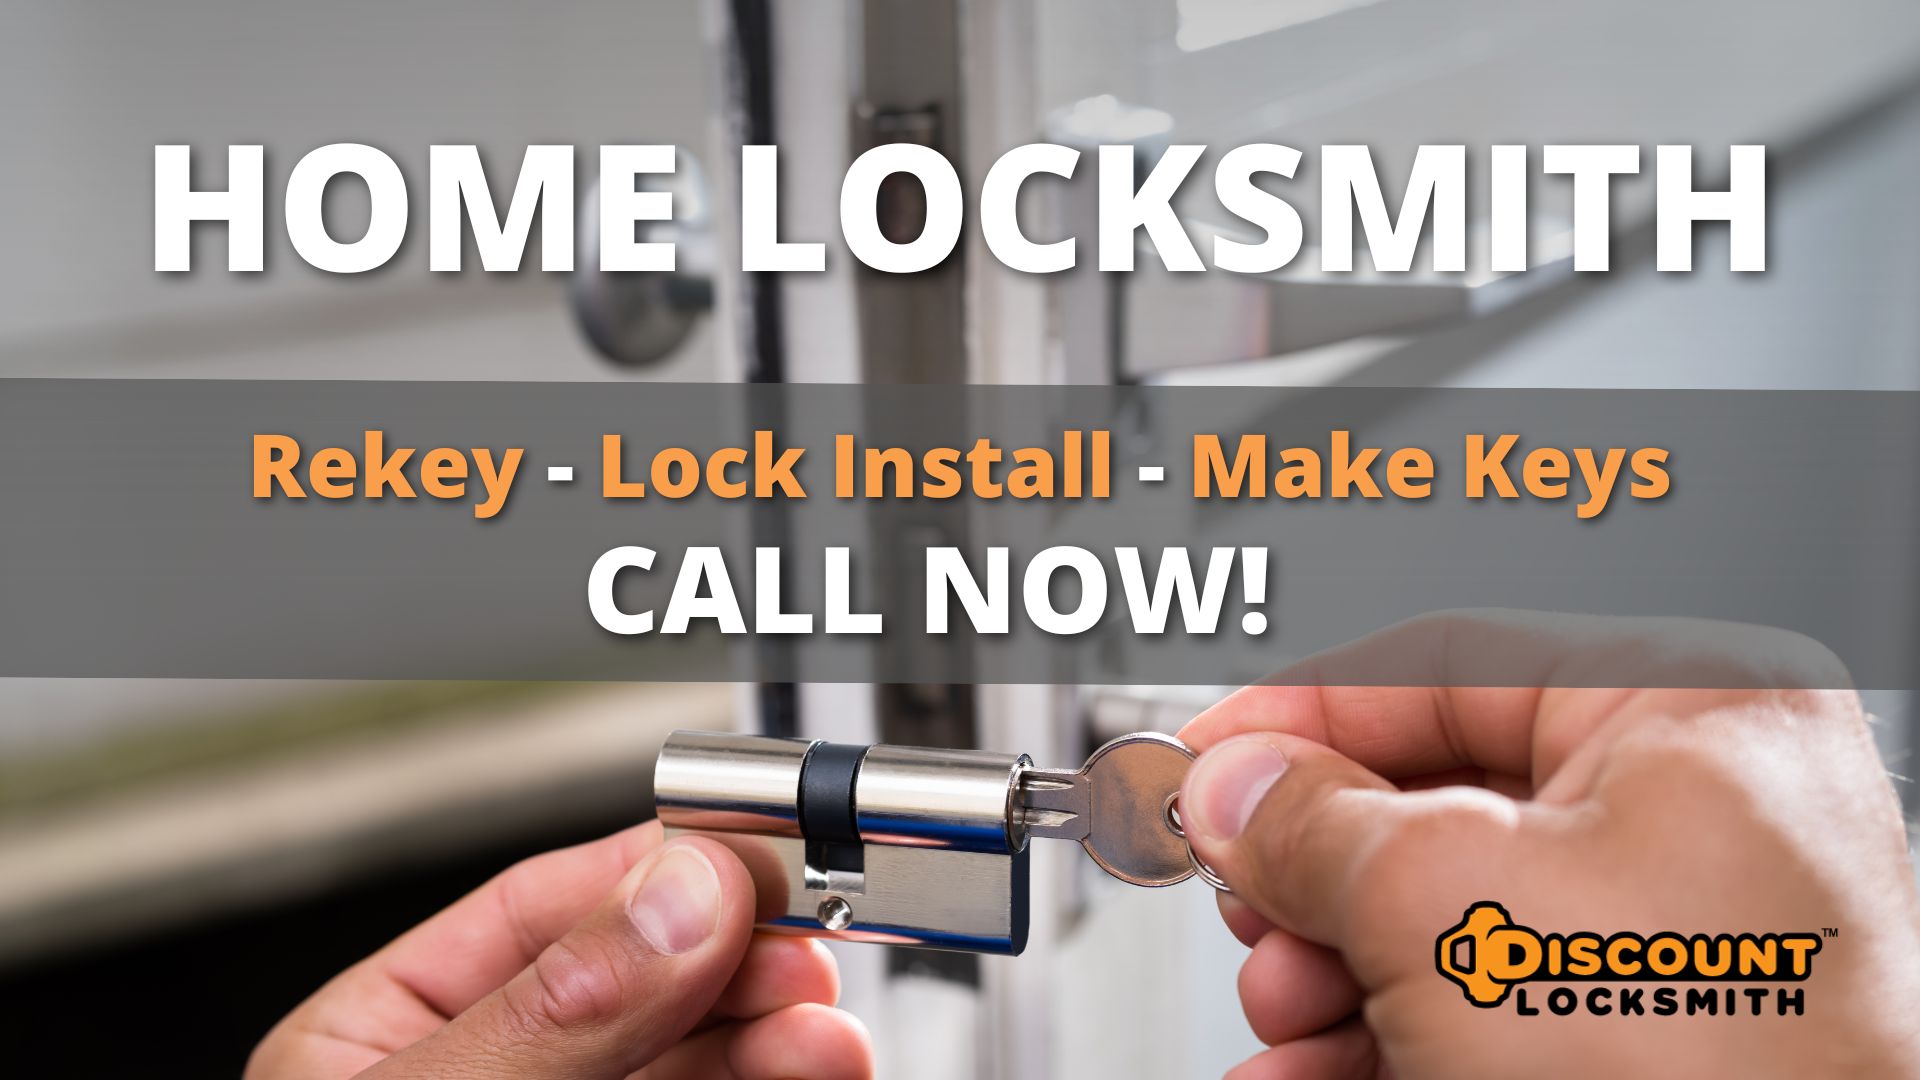 Home Locksmith Service